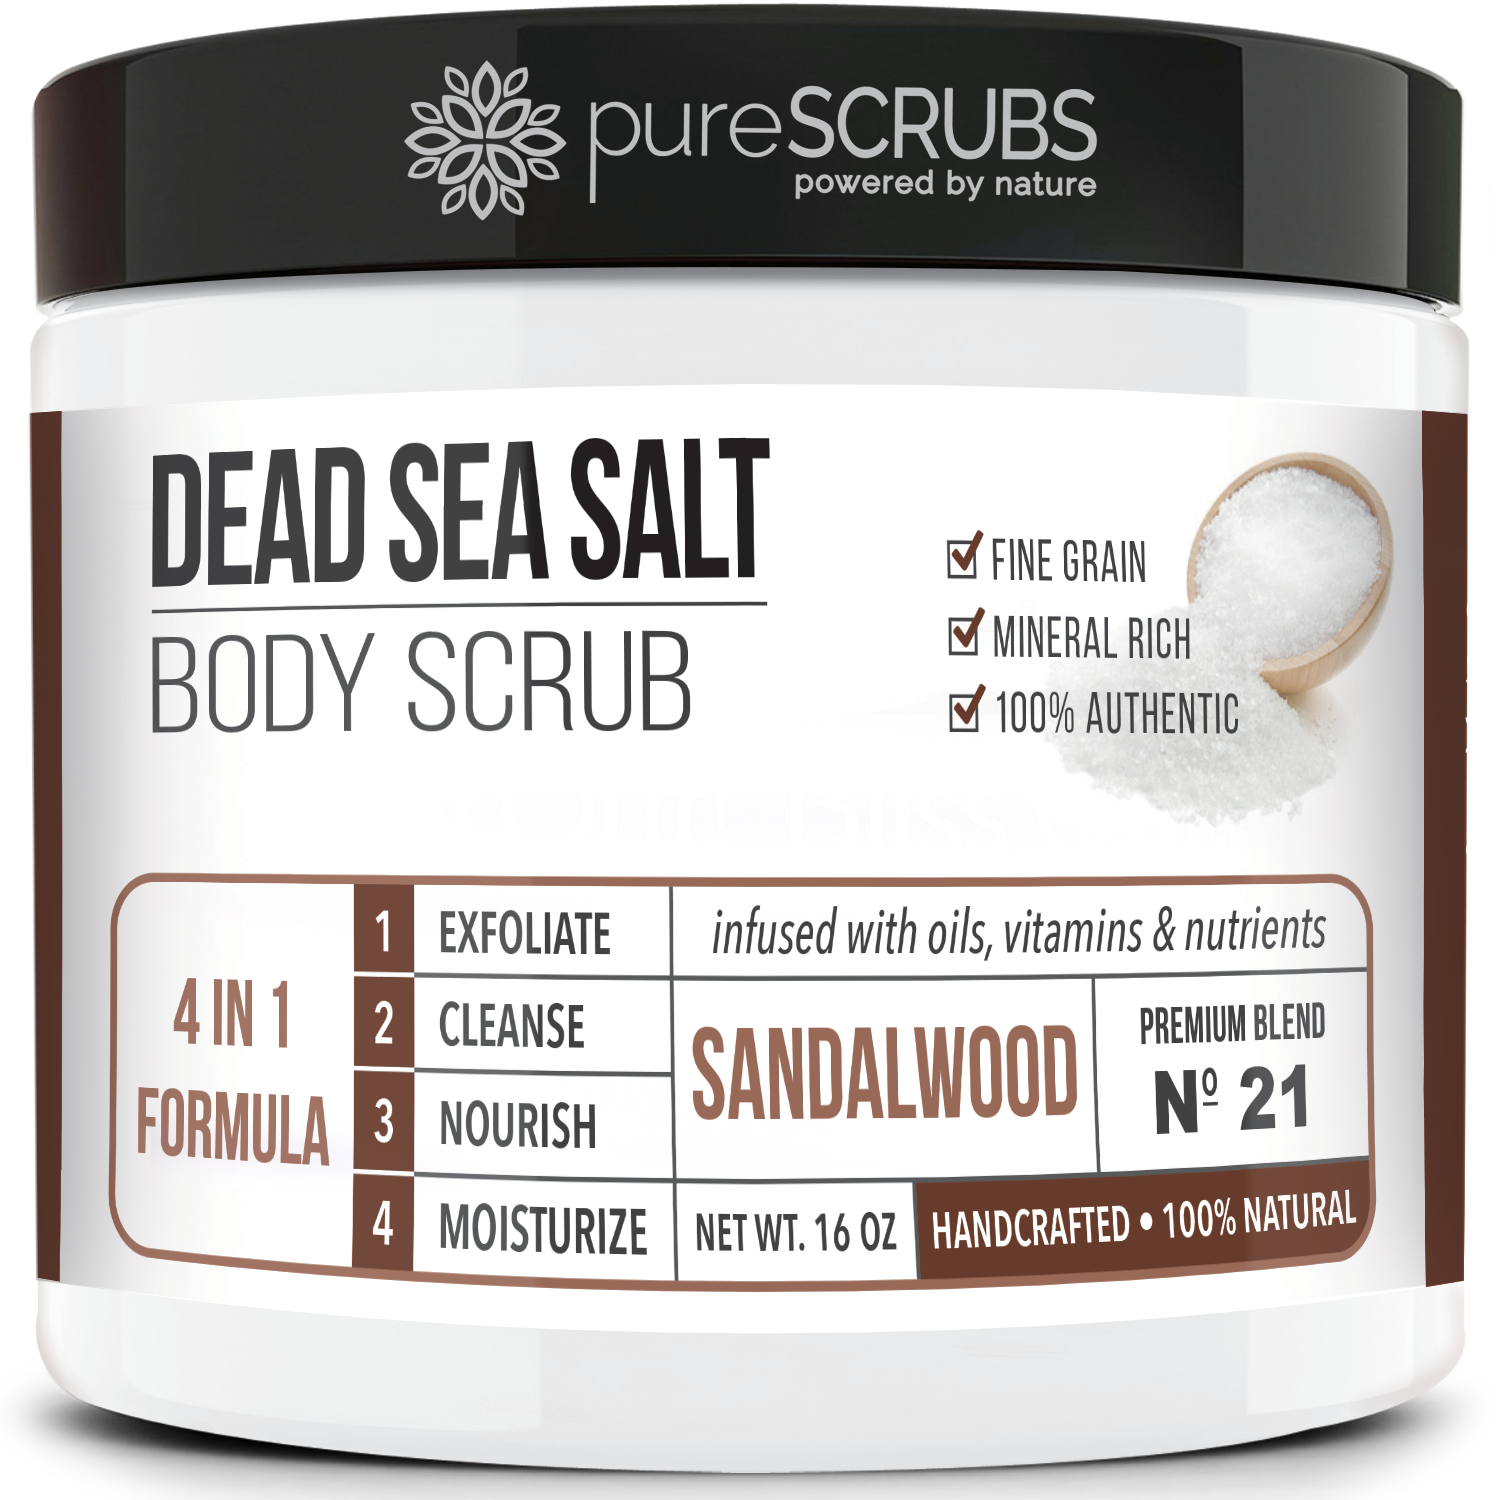 Sandalwood Body Scrub / Dead Sea Salt / Premium Blend #21